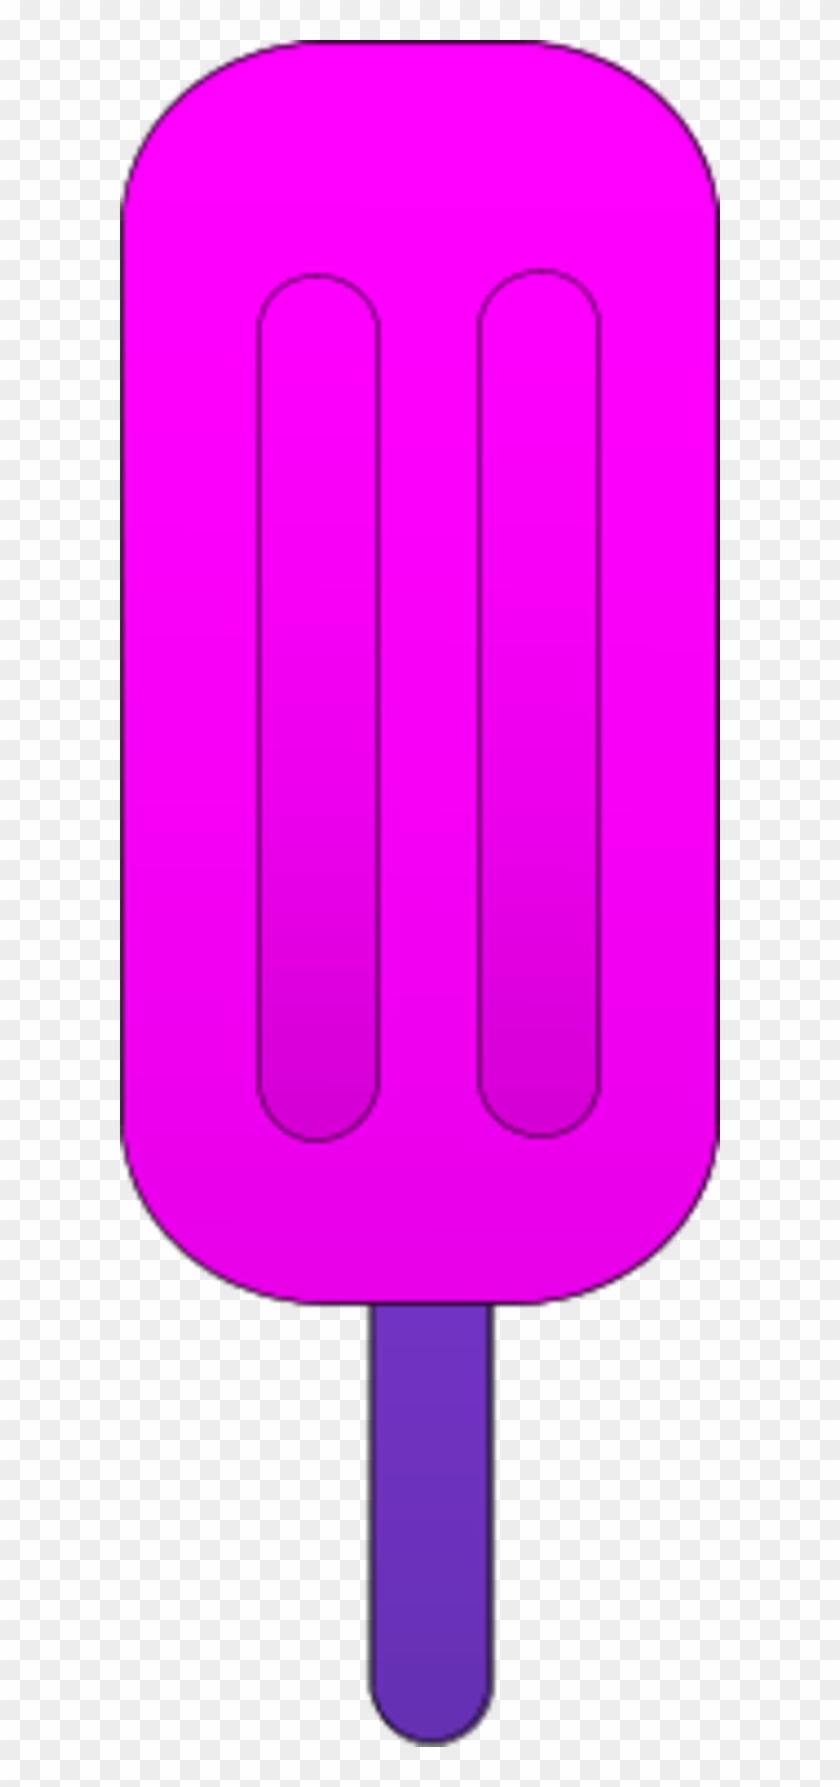 Popsicle Clip Art Colorful - Popsicle Clip Art Colorful #936190